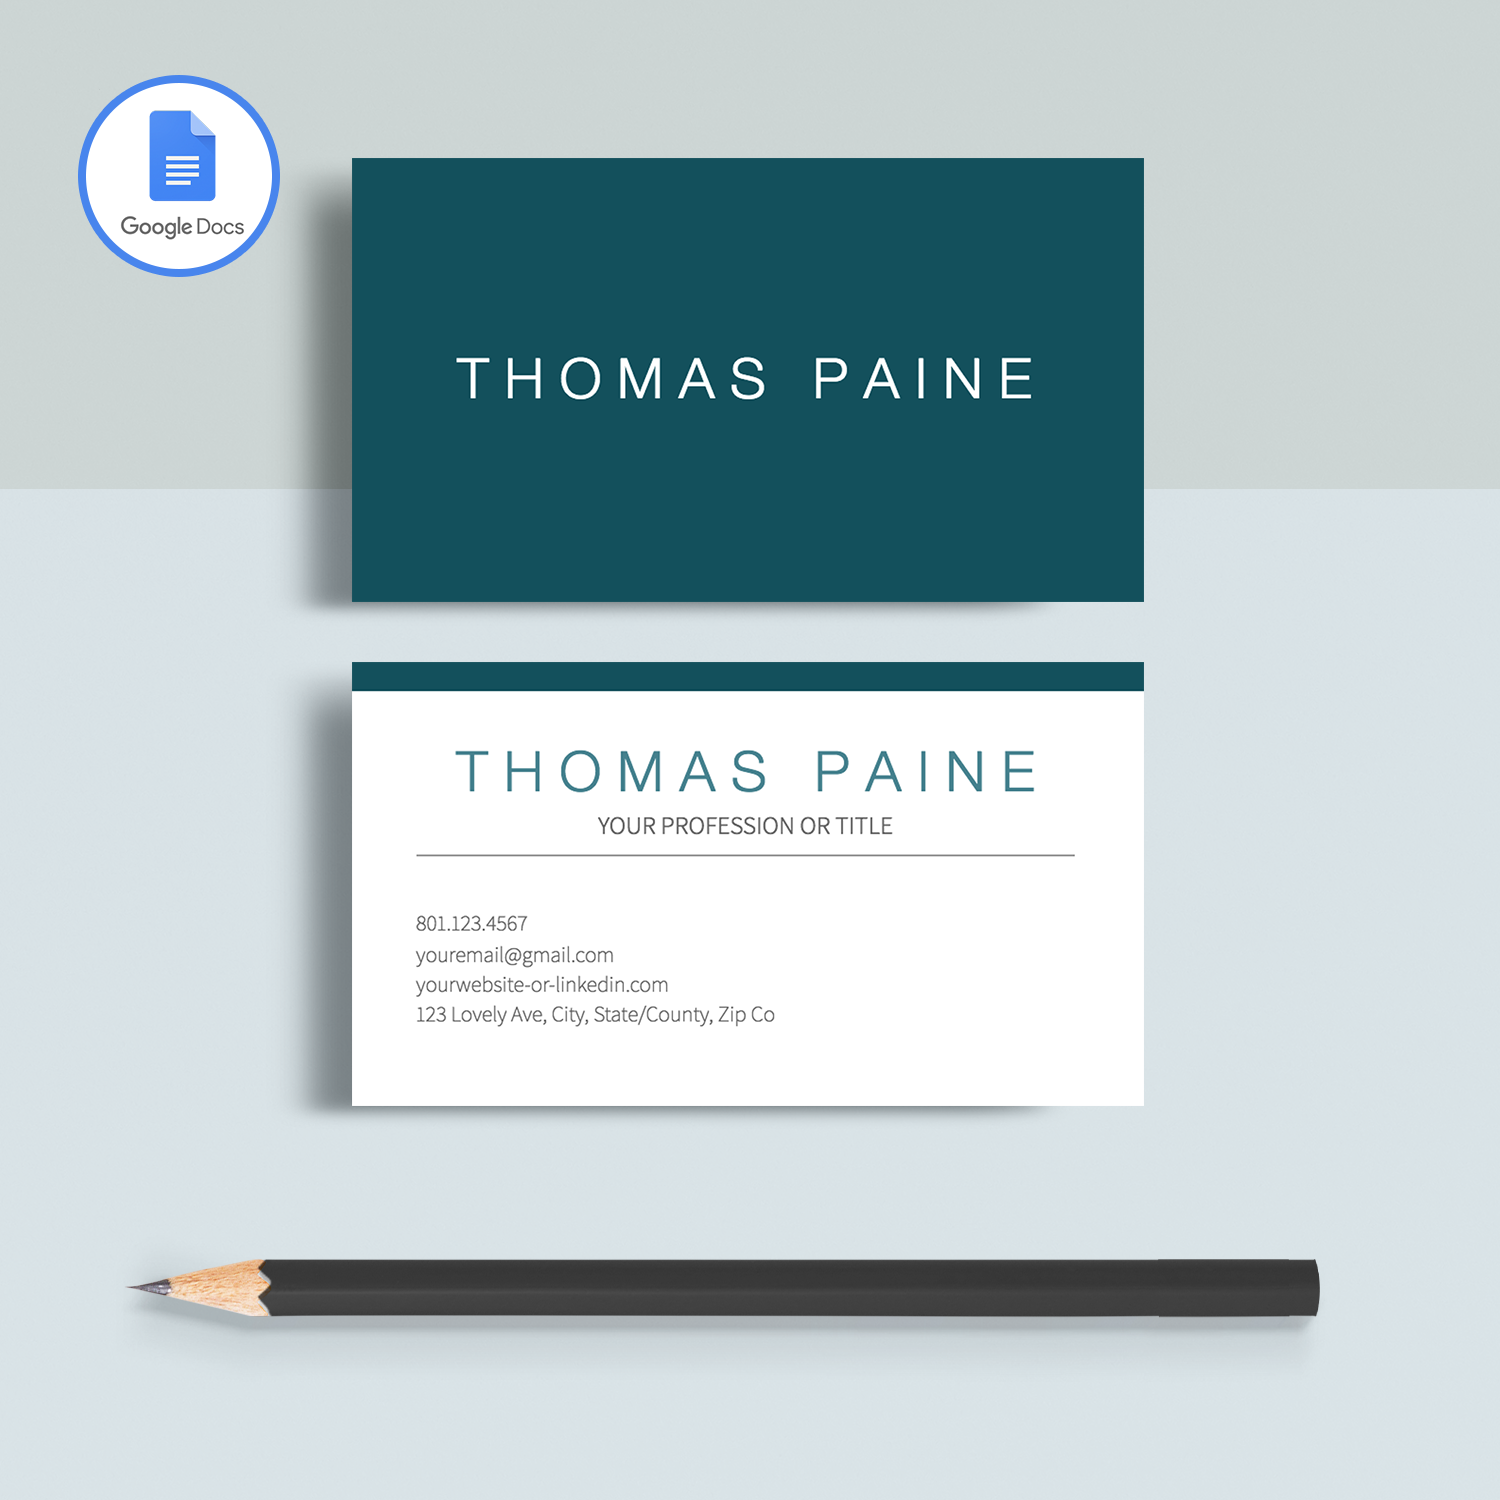 Thomas Paine | Google Docs Professional Business Cards Template - MioDocs